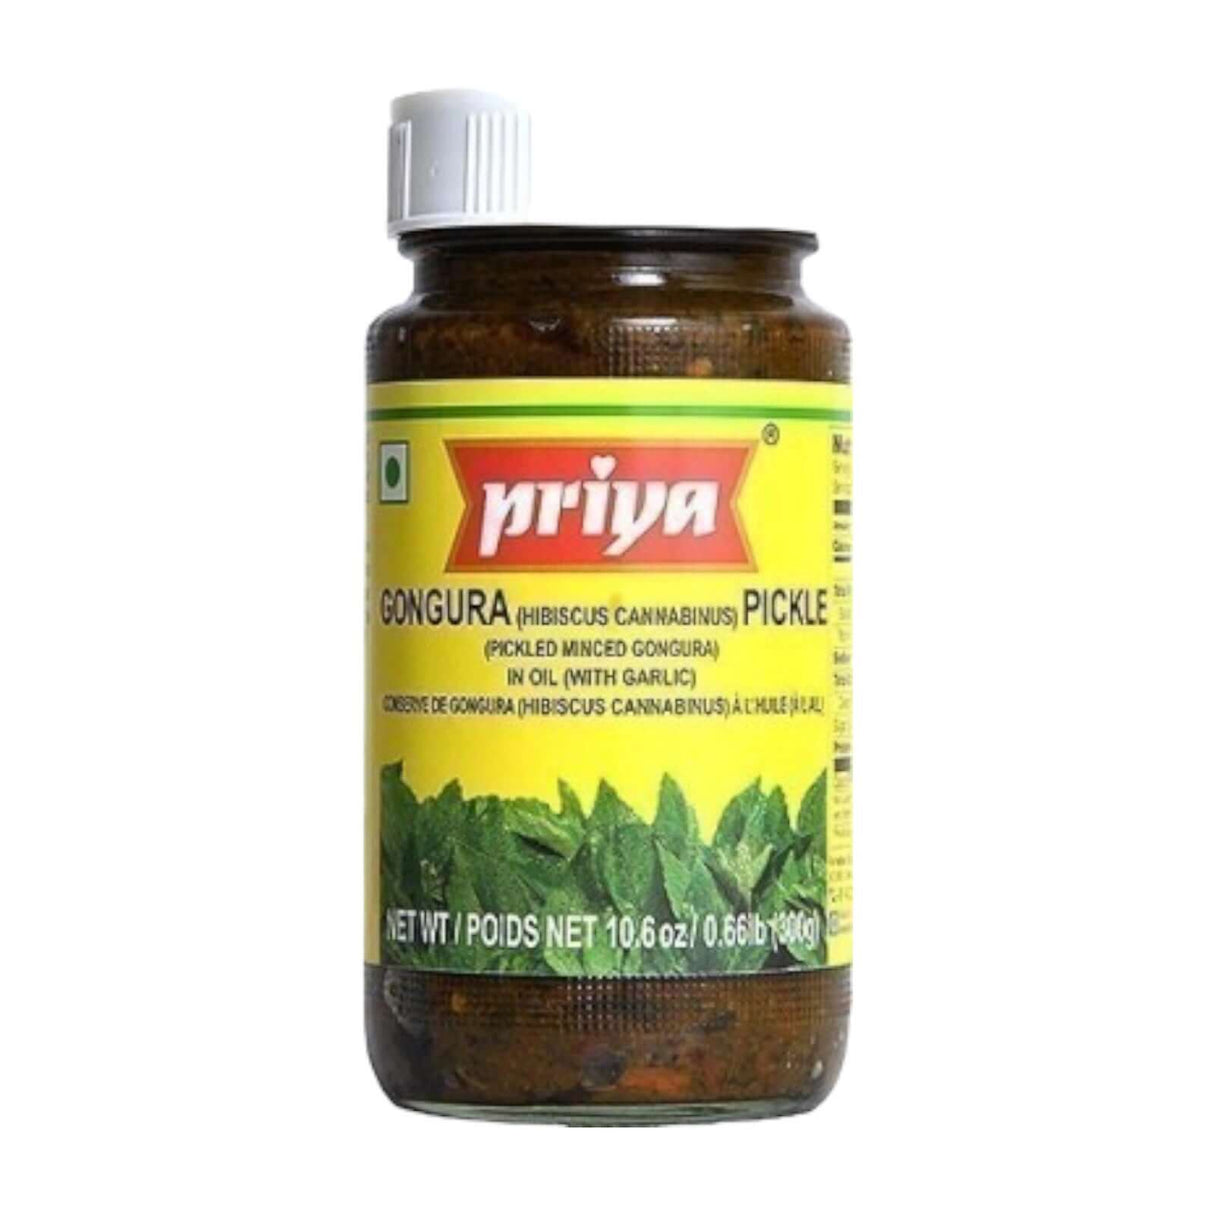 Priya Gongura Pickle in Oil (with Garlic)